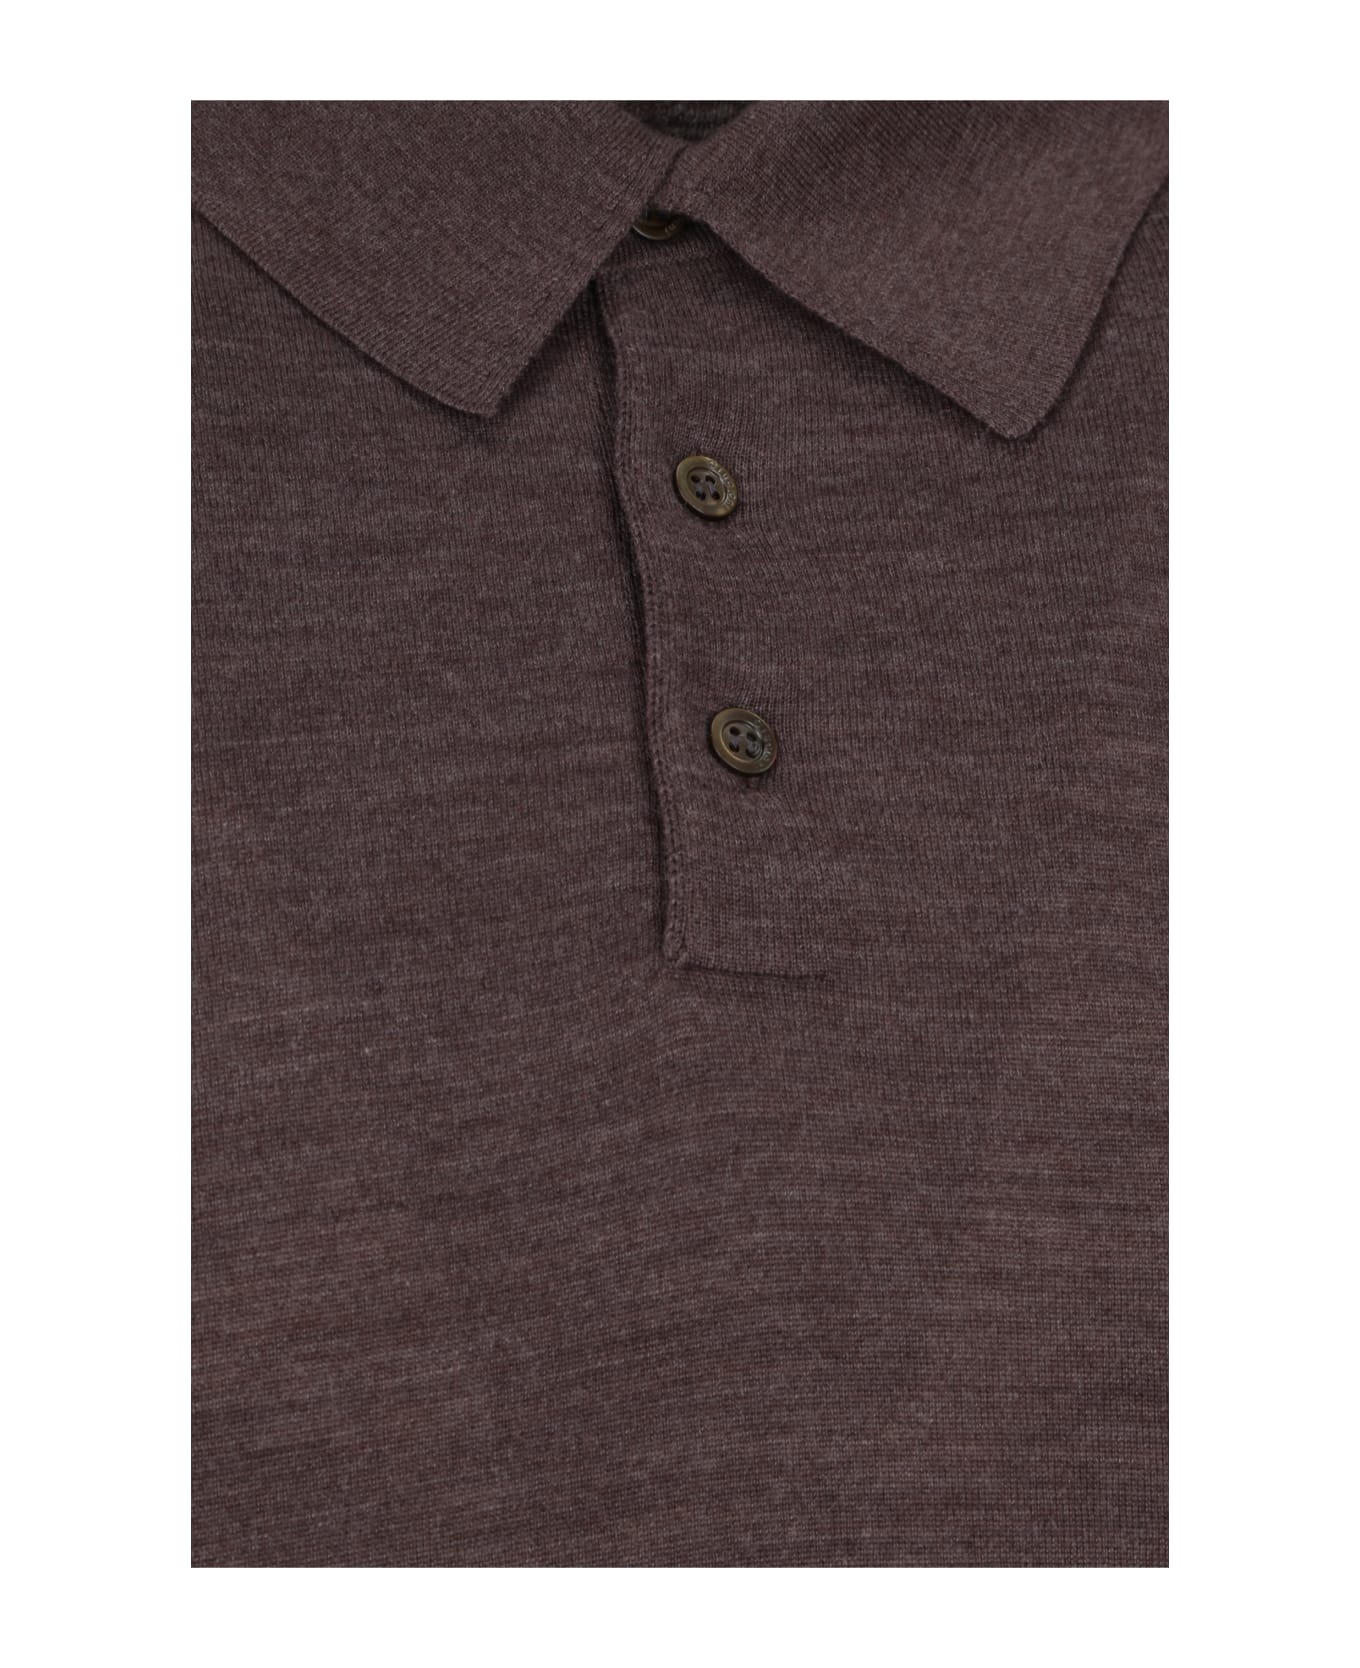 Cruciani Polo Shirt - Corteccia ニットウェア